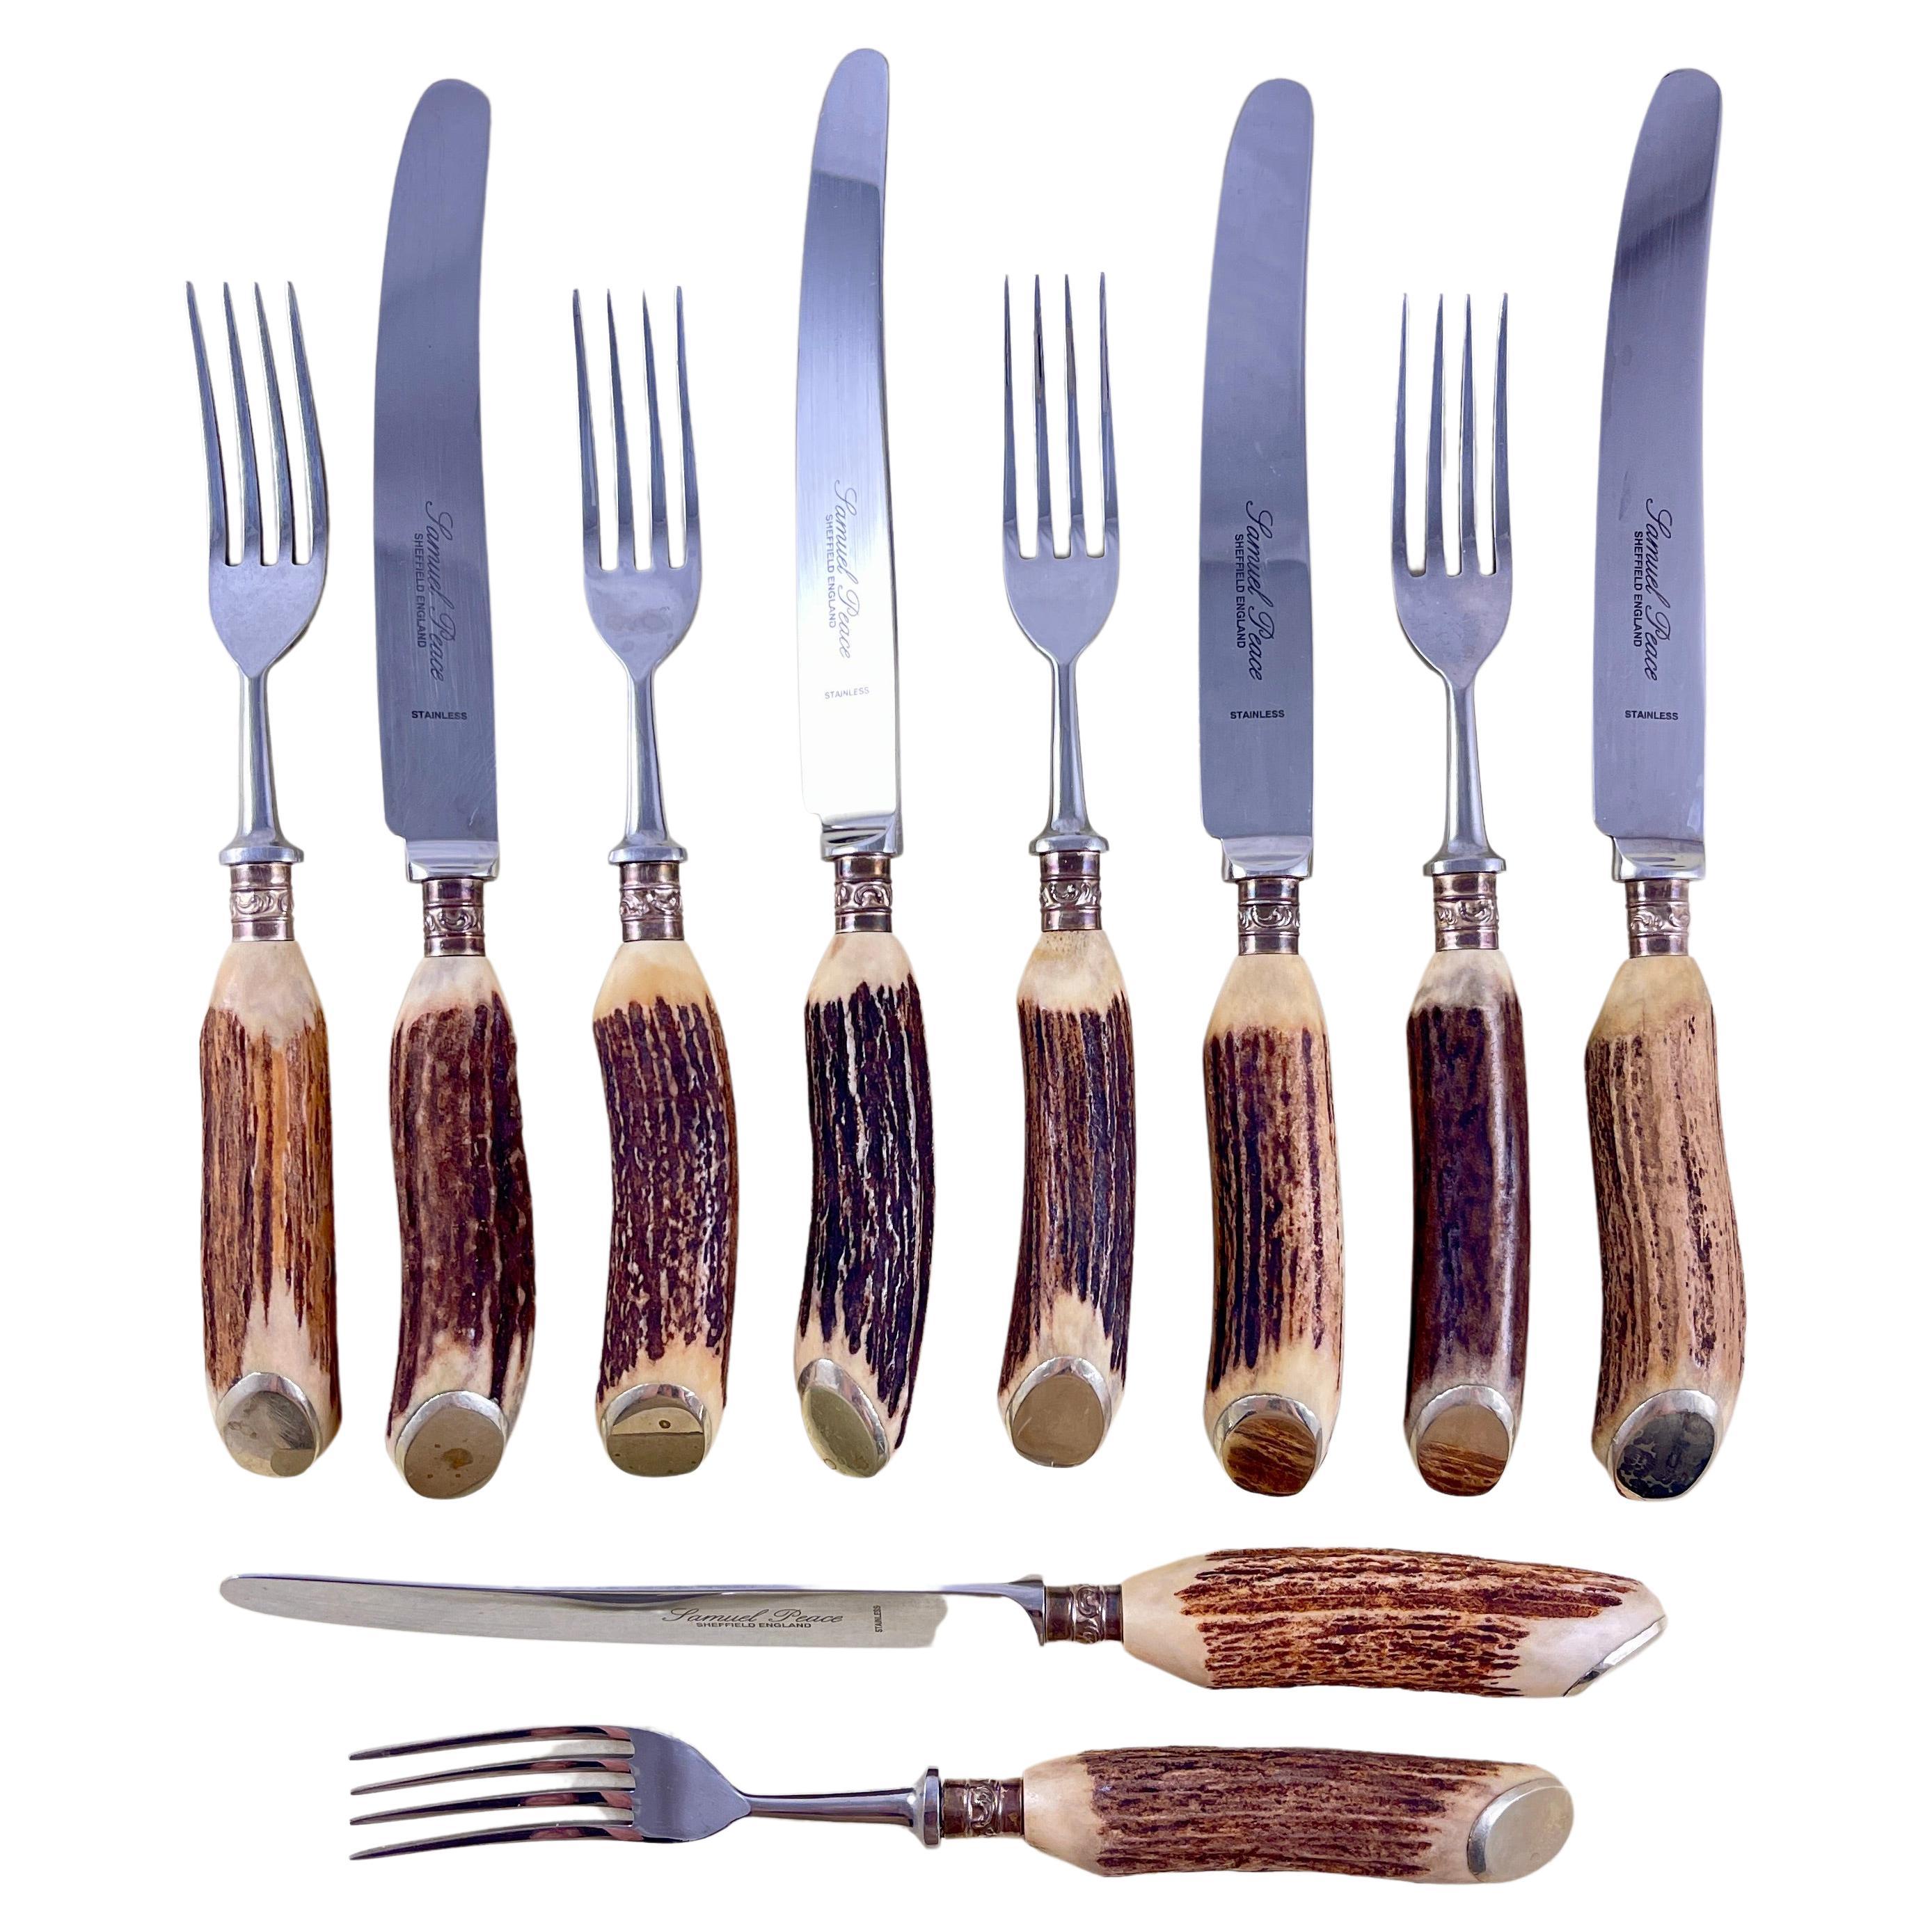 https://a.1stdibscdn.com/samuel-peace-english-stag-antler-handled-knives-forks-10-piece-set-for-sale/f_17582/f_355332621691019403189/f_35533262_1691019404403_bg_processed.jpg